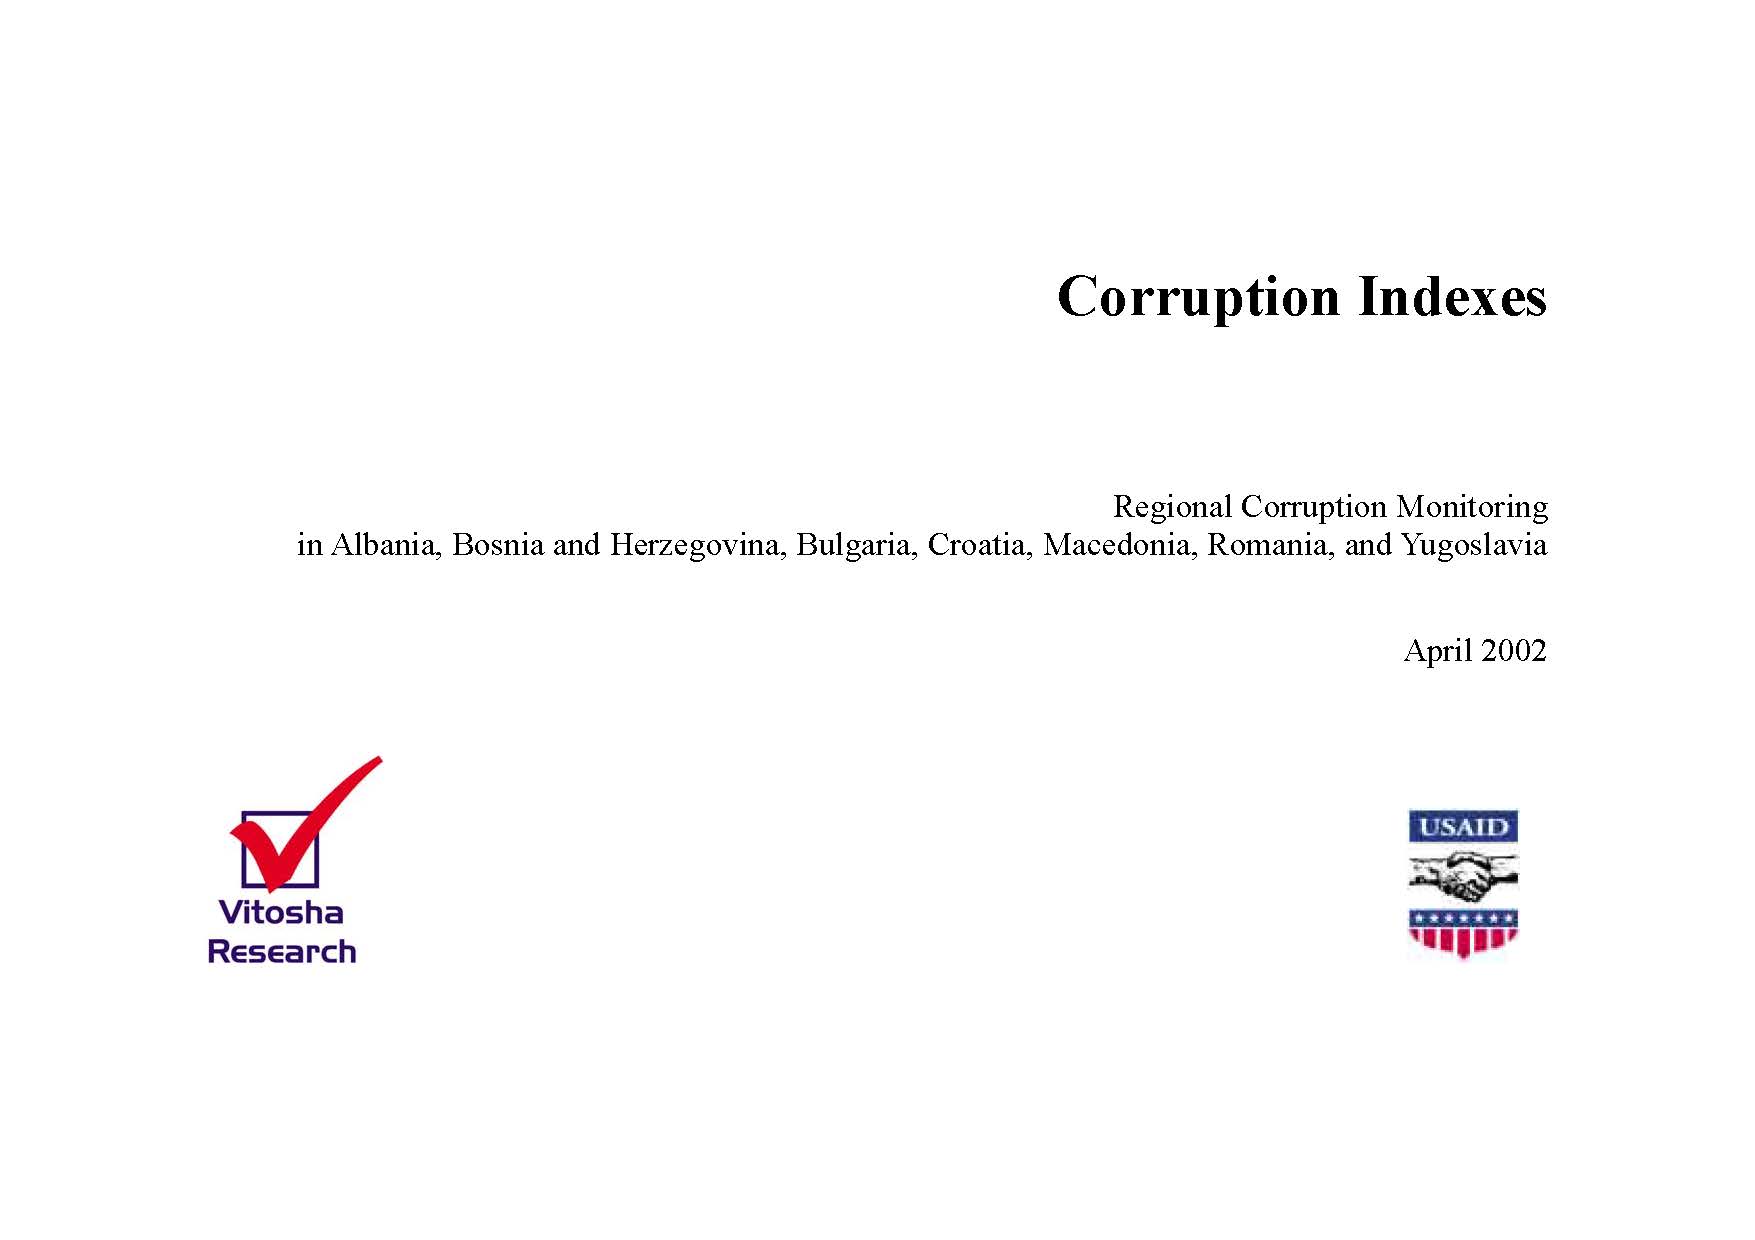 Corruption Indexes, Regional Corruption Monitoring in Albania, Bosnia and Herzegovina, Bulgaria, Croatia, Macedonia, Romania, and Yugoslavia, April 2002 Cover Image